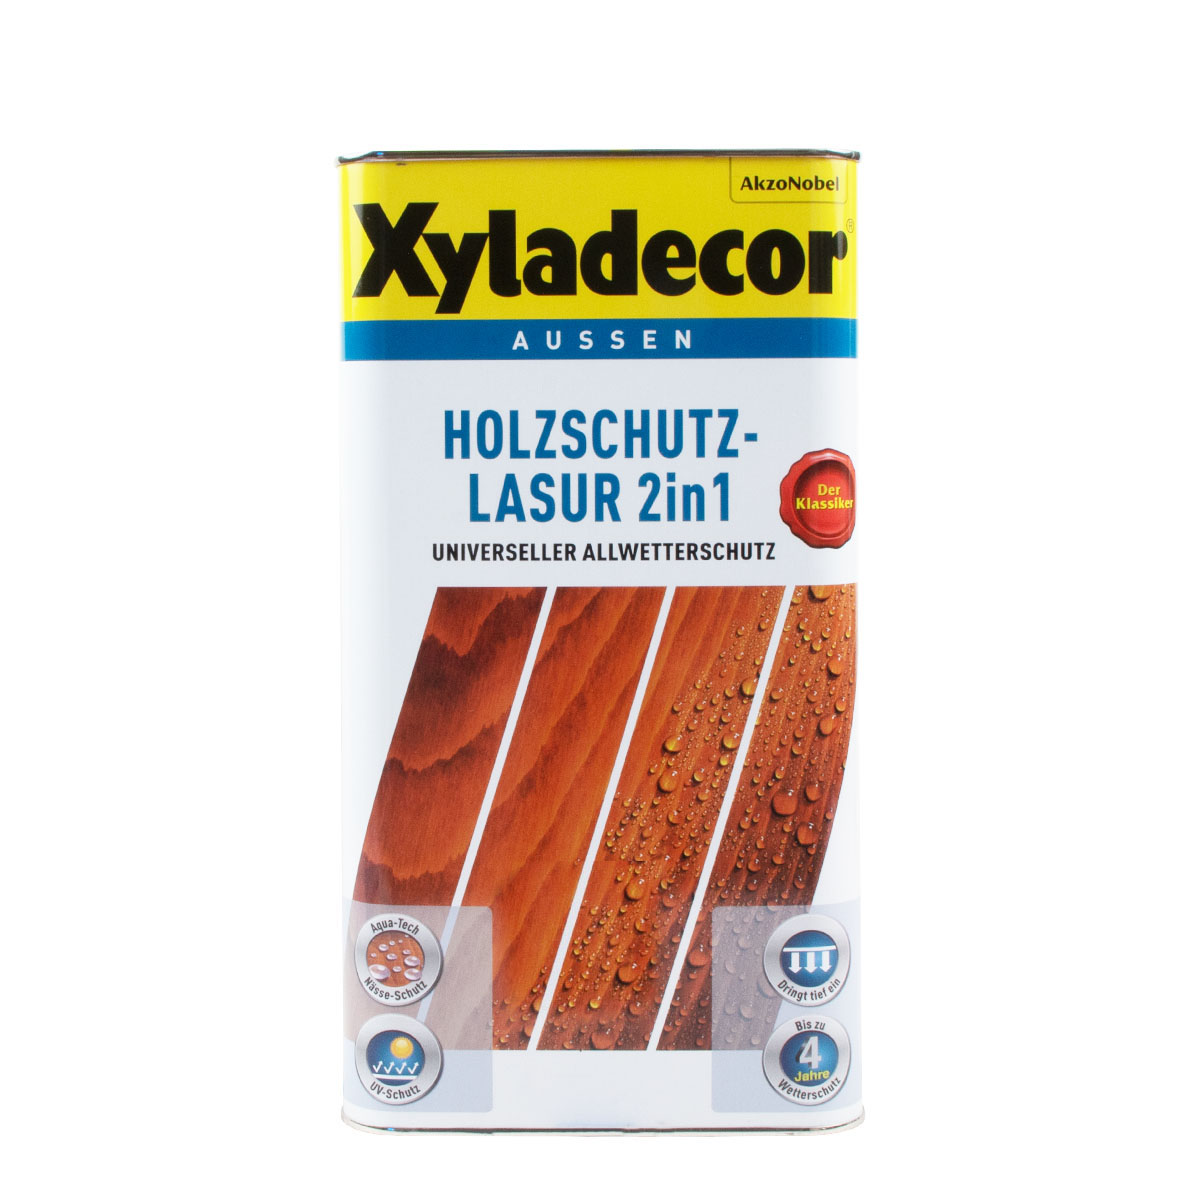 Xyladecor Holzschutz-Lasur 2in1 5L Eiche